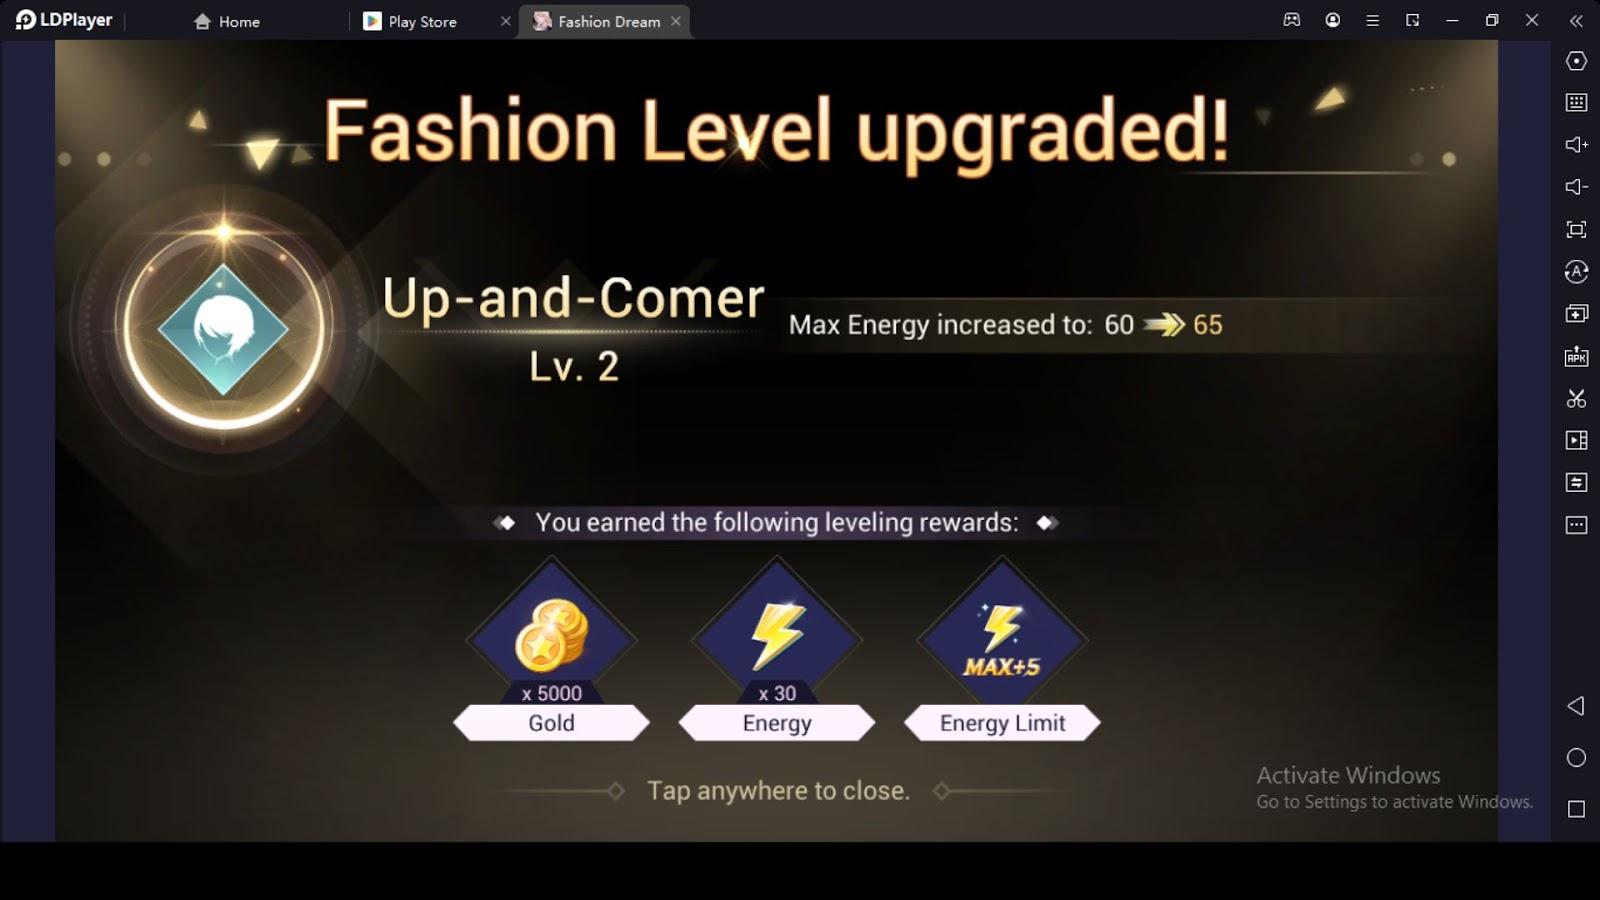 Upgrade Your Fashion Levels